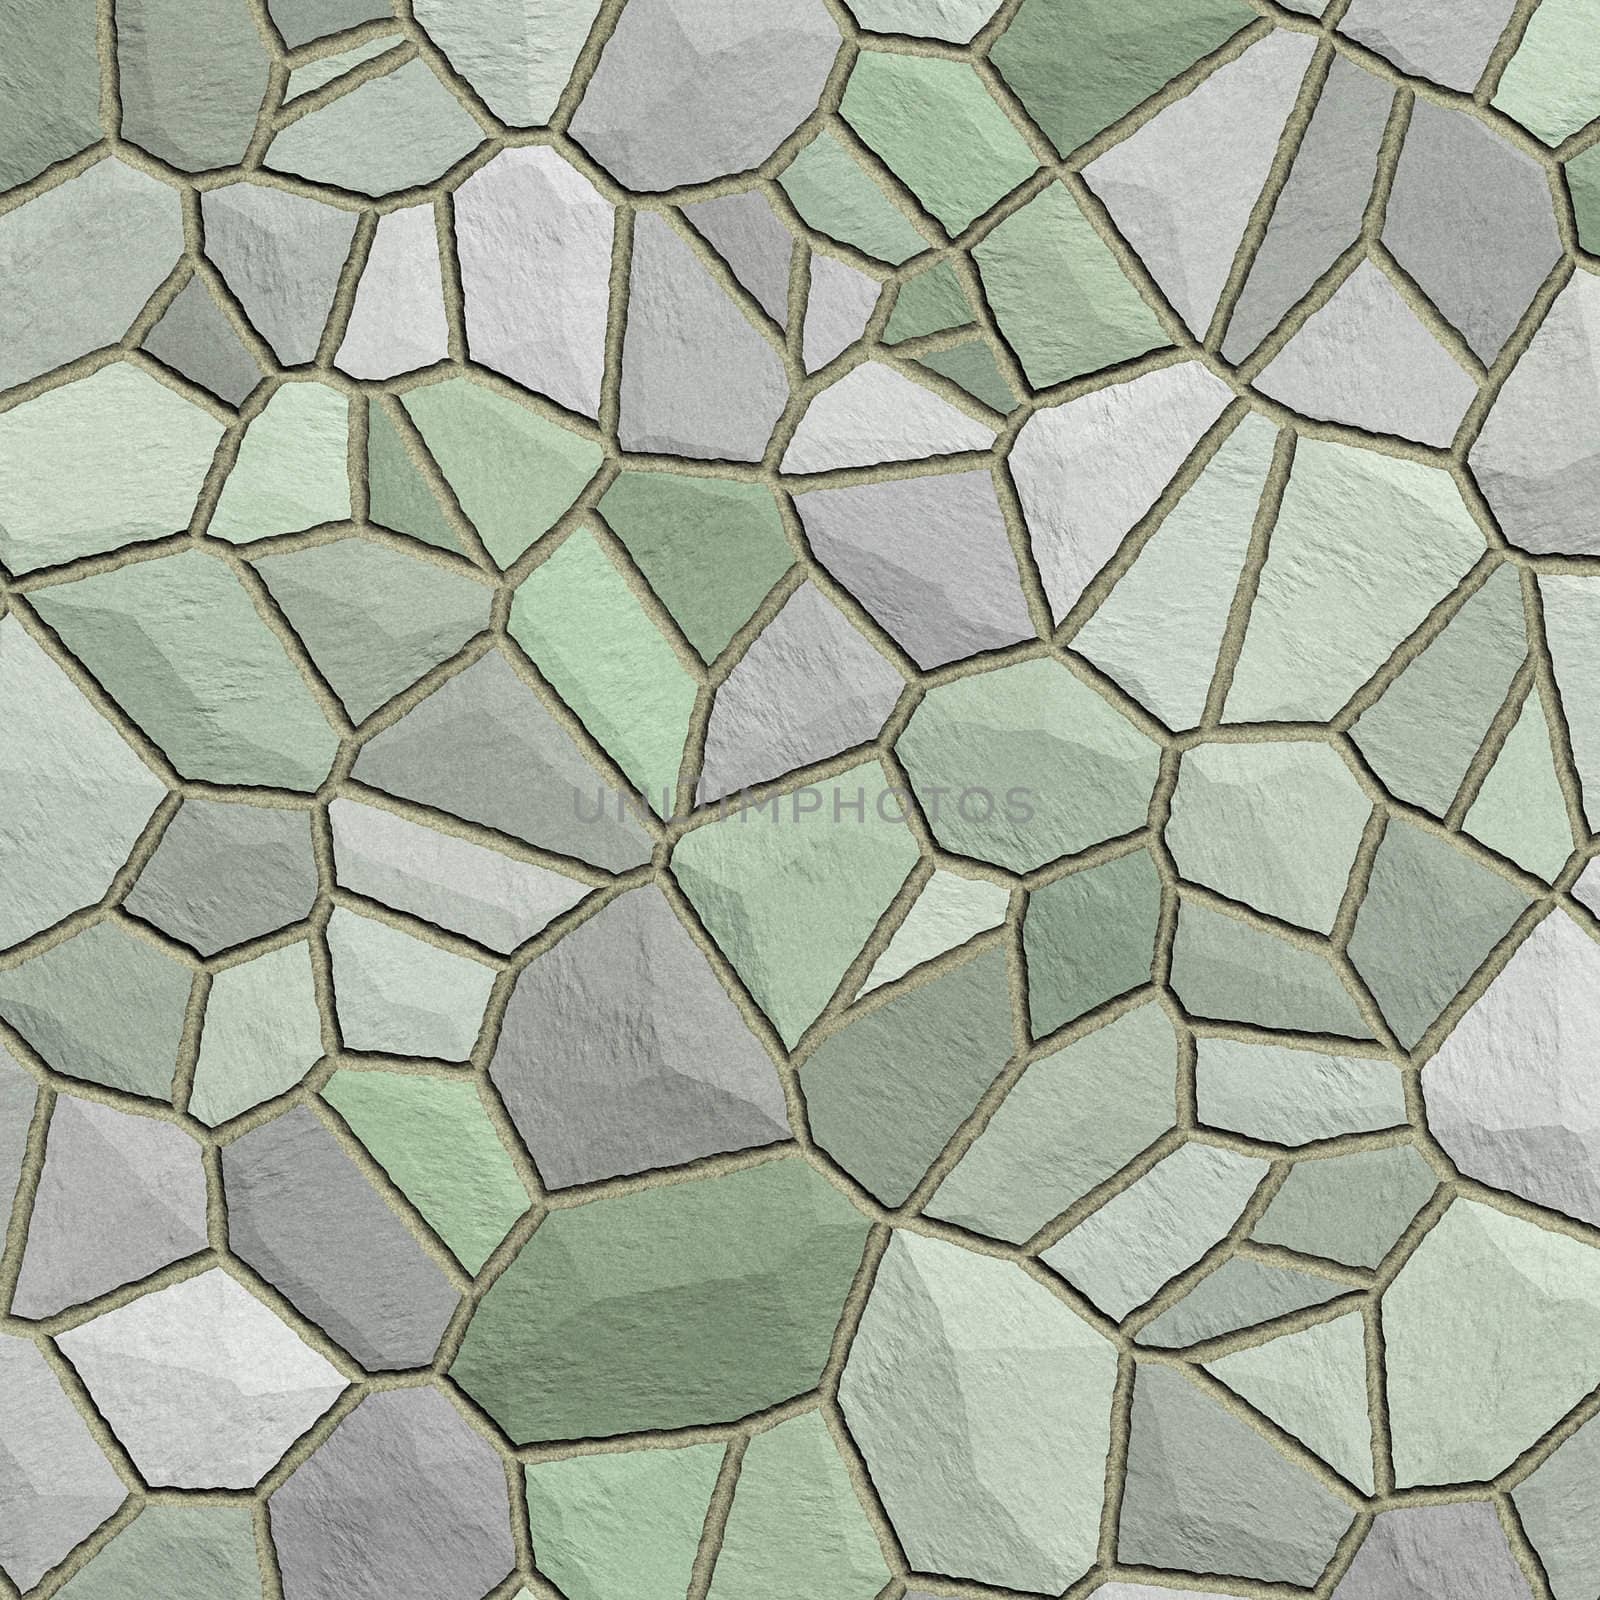 Stones texture in shades of green by kmiragaya